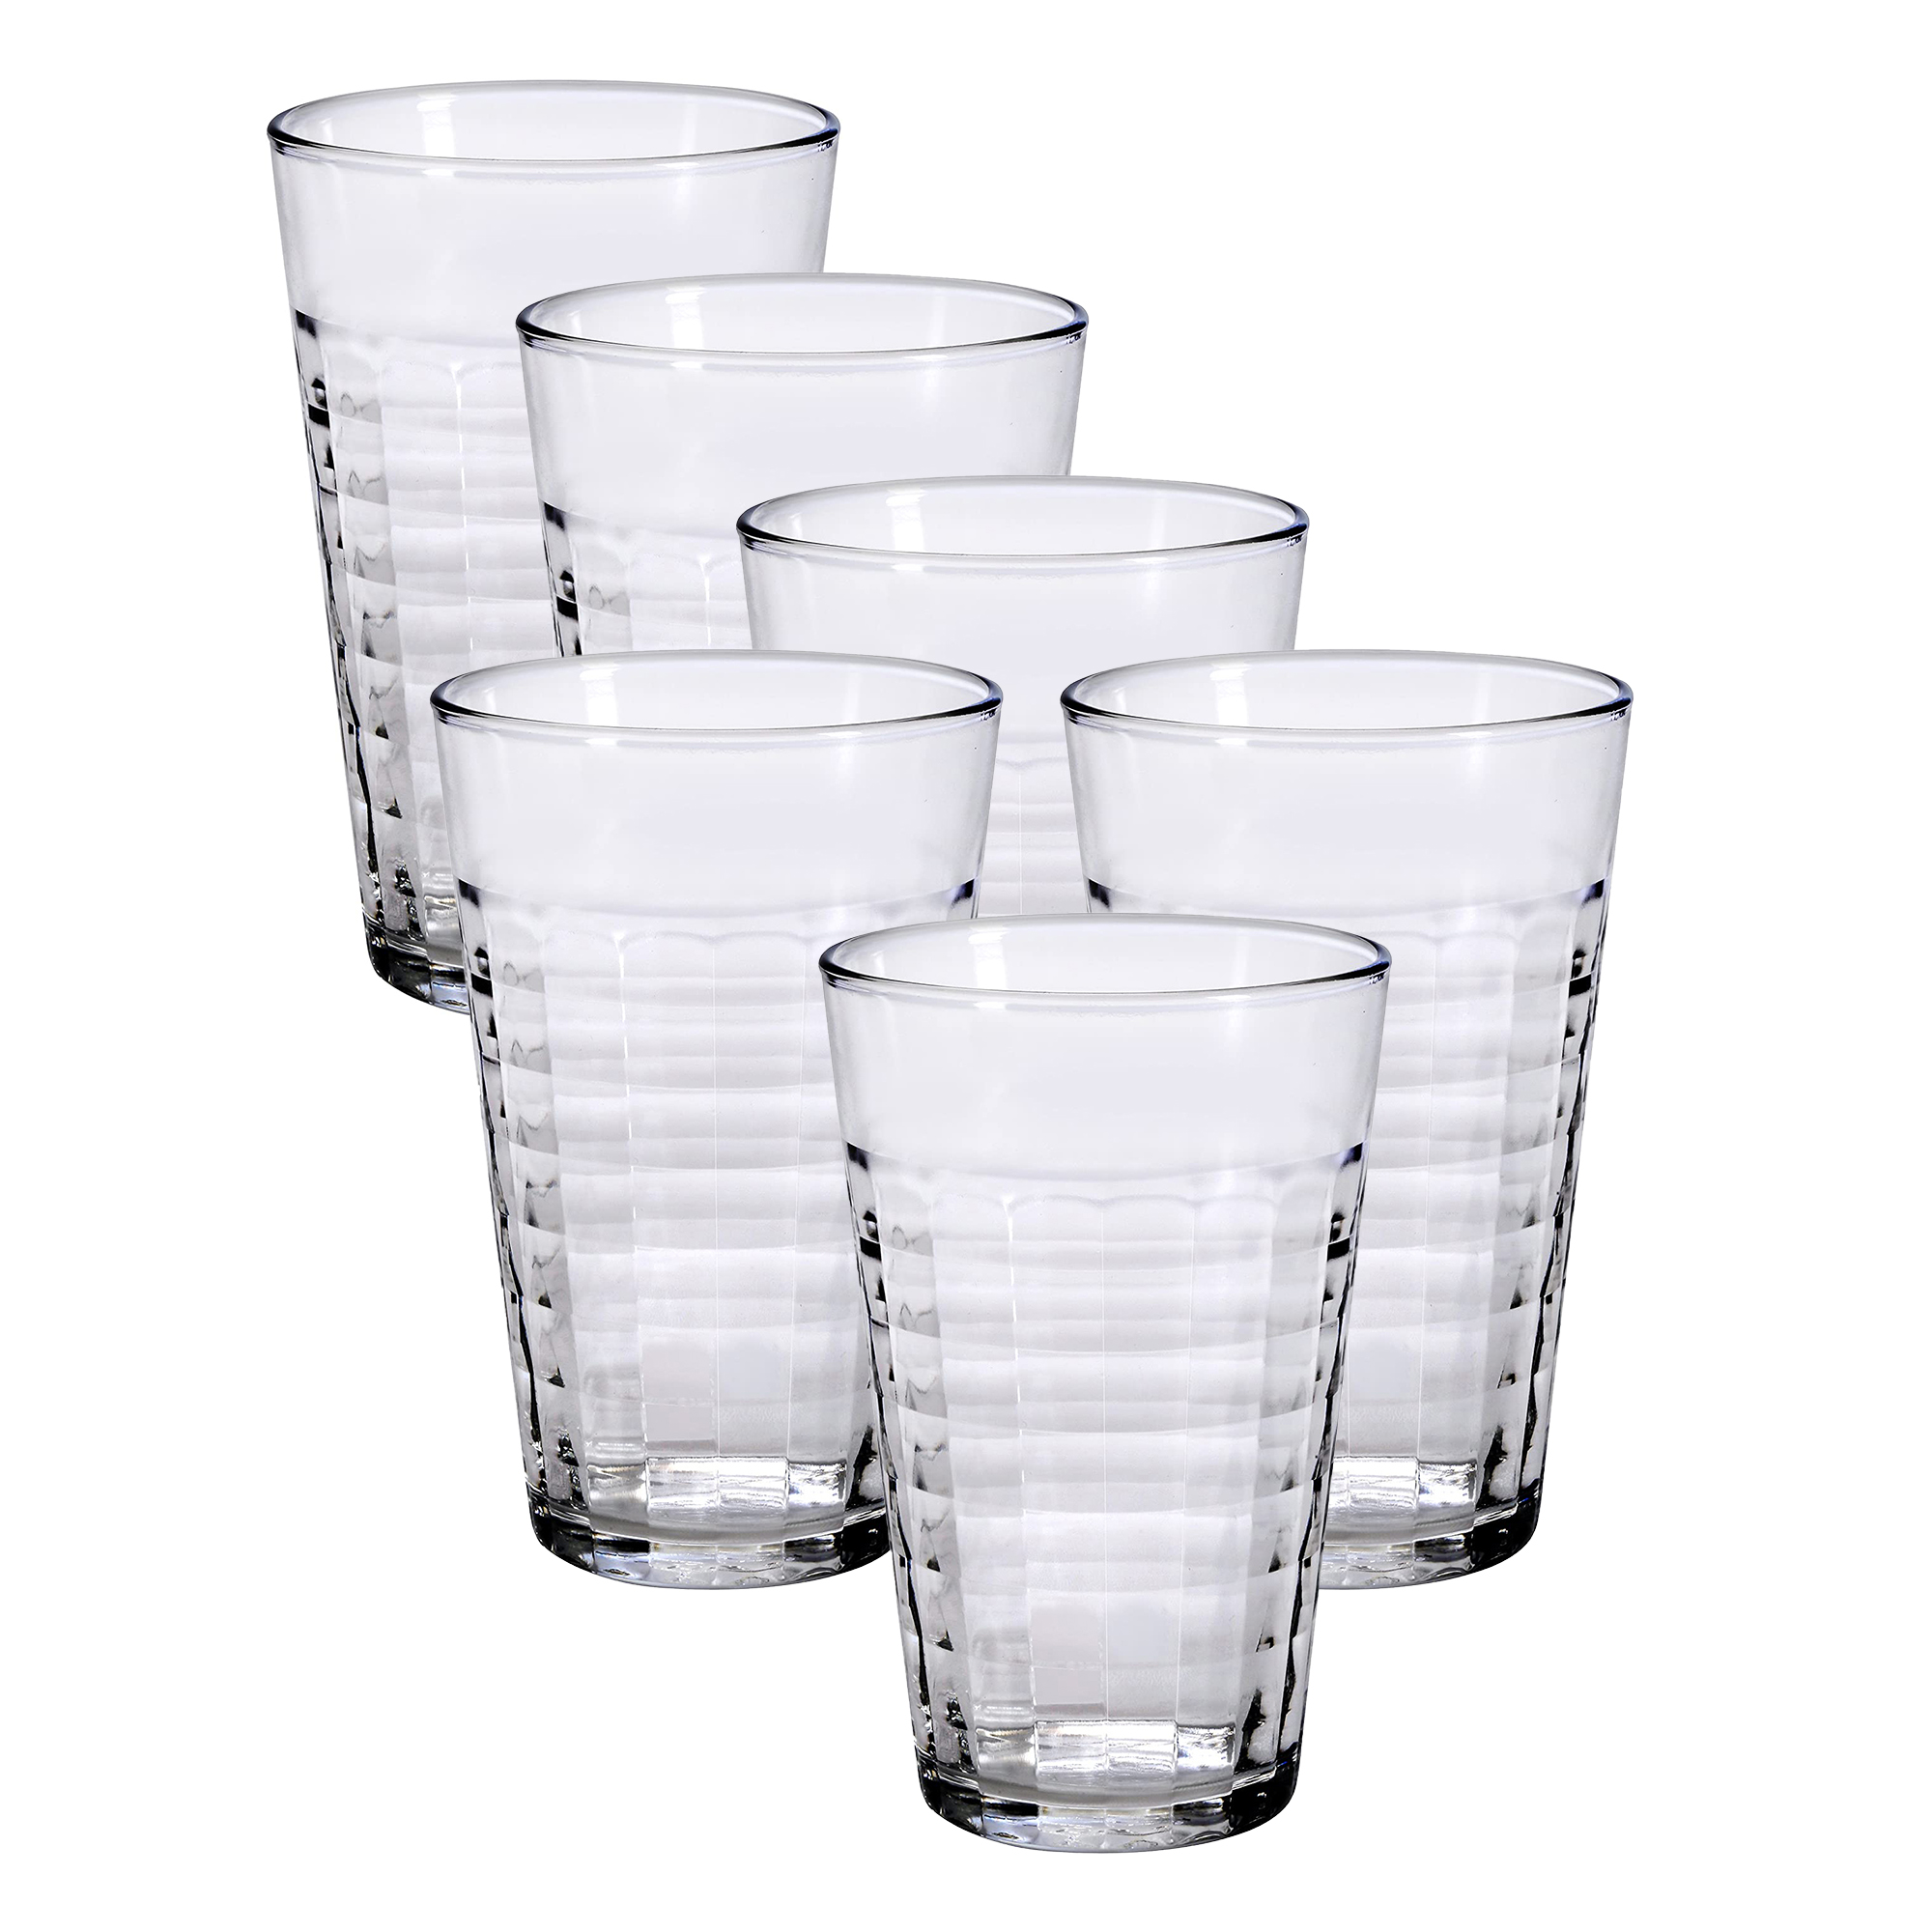 Duralex Prisme 17.5 Oz Clear Tempered Glass Tumbler Drinking Glasses, Set of 6 3550190502909 | eBay